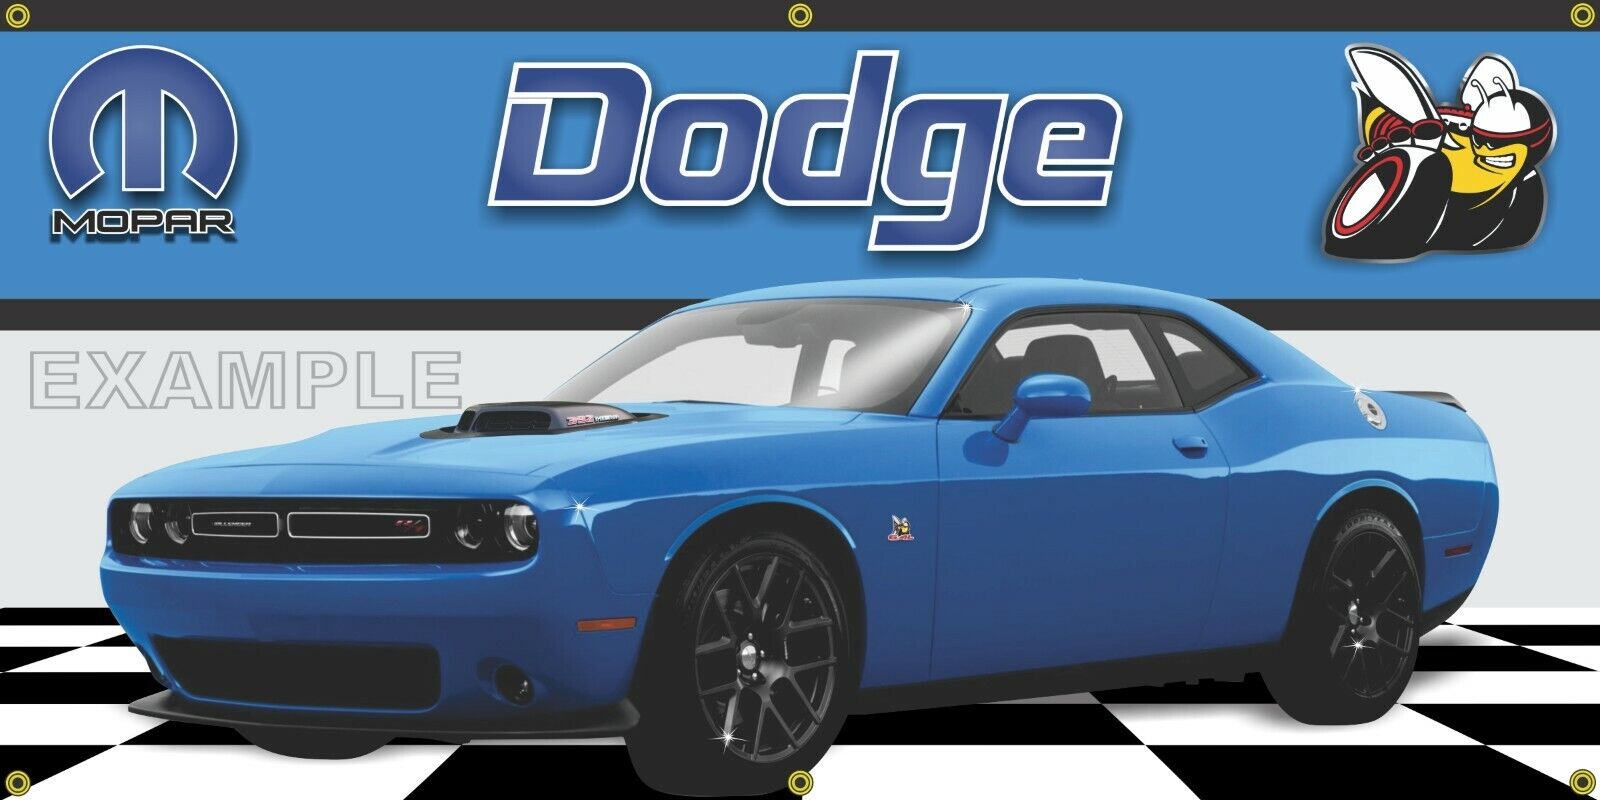 2016 DODGE Challenger Scat Pack Shaker B5 Blue GARAGE SCENE BANNER SIGN MURAL